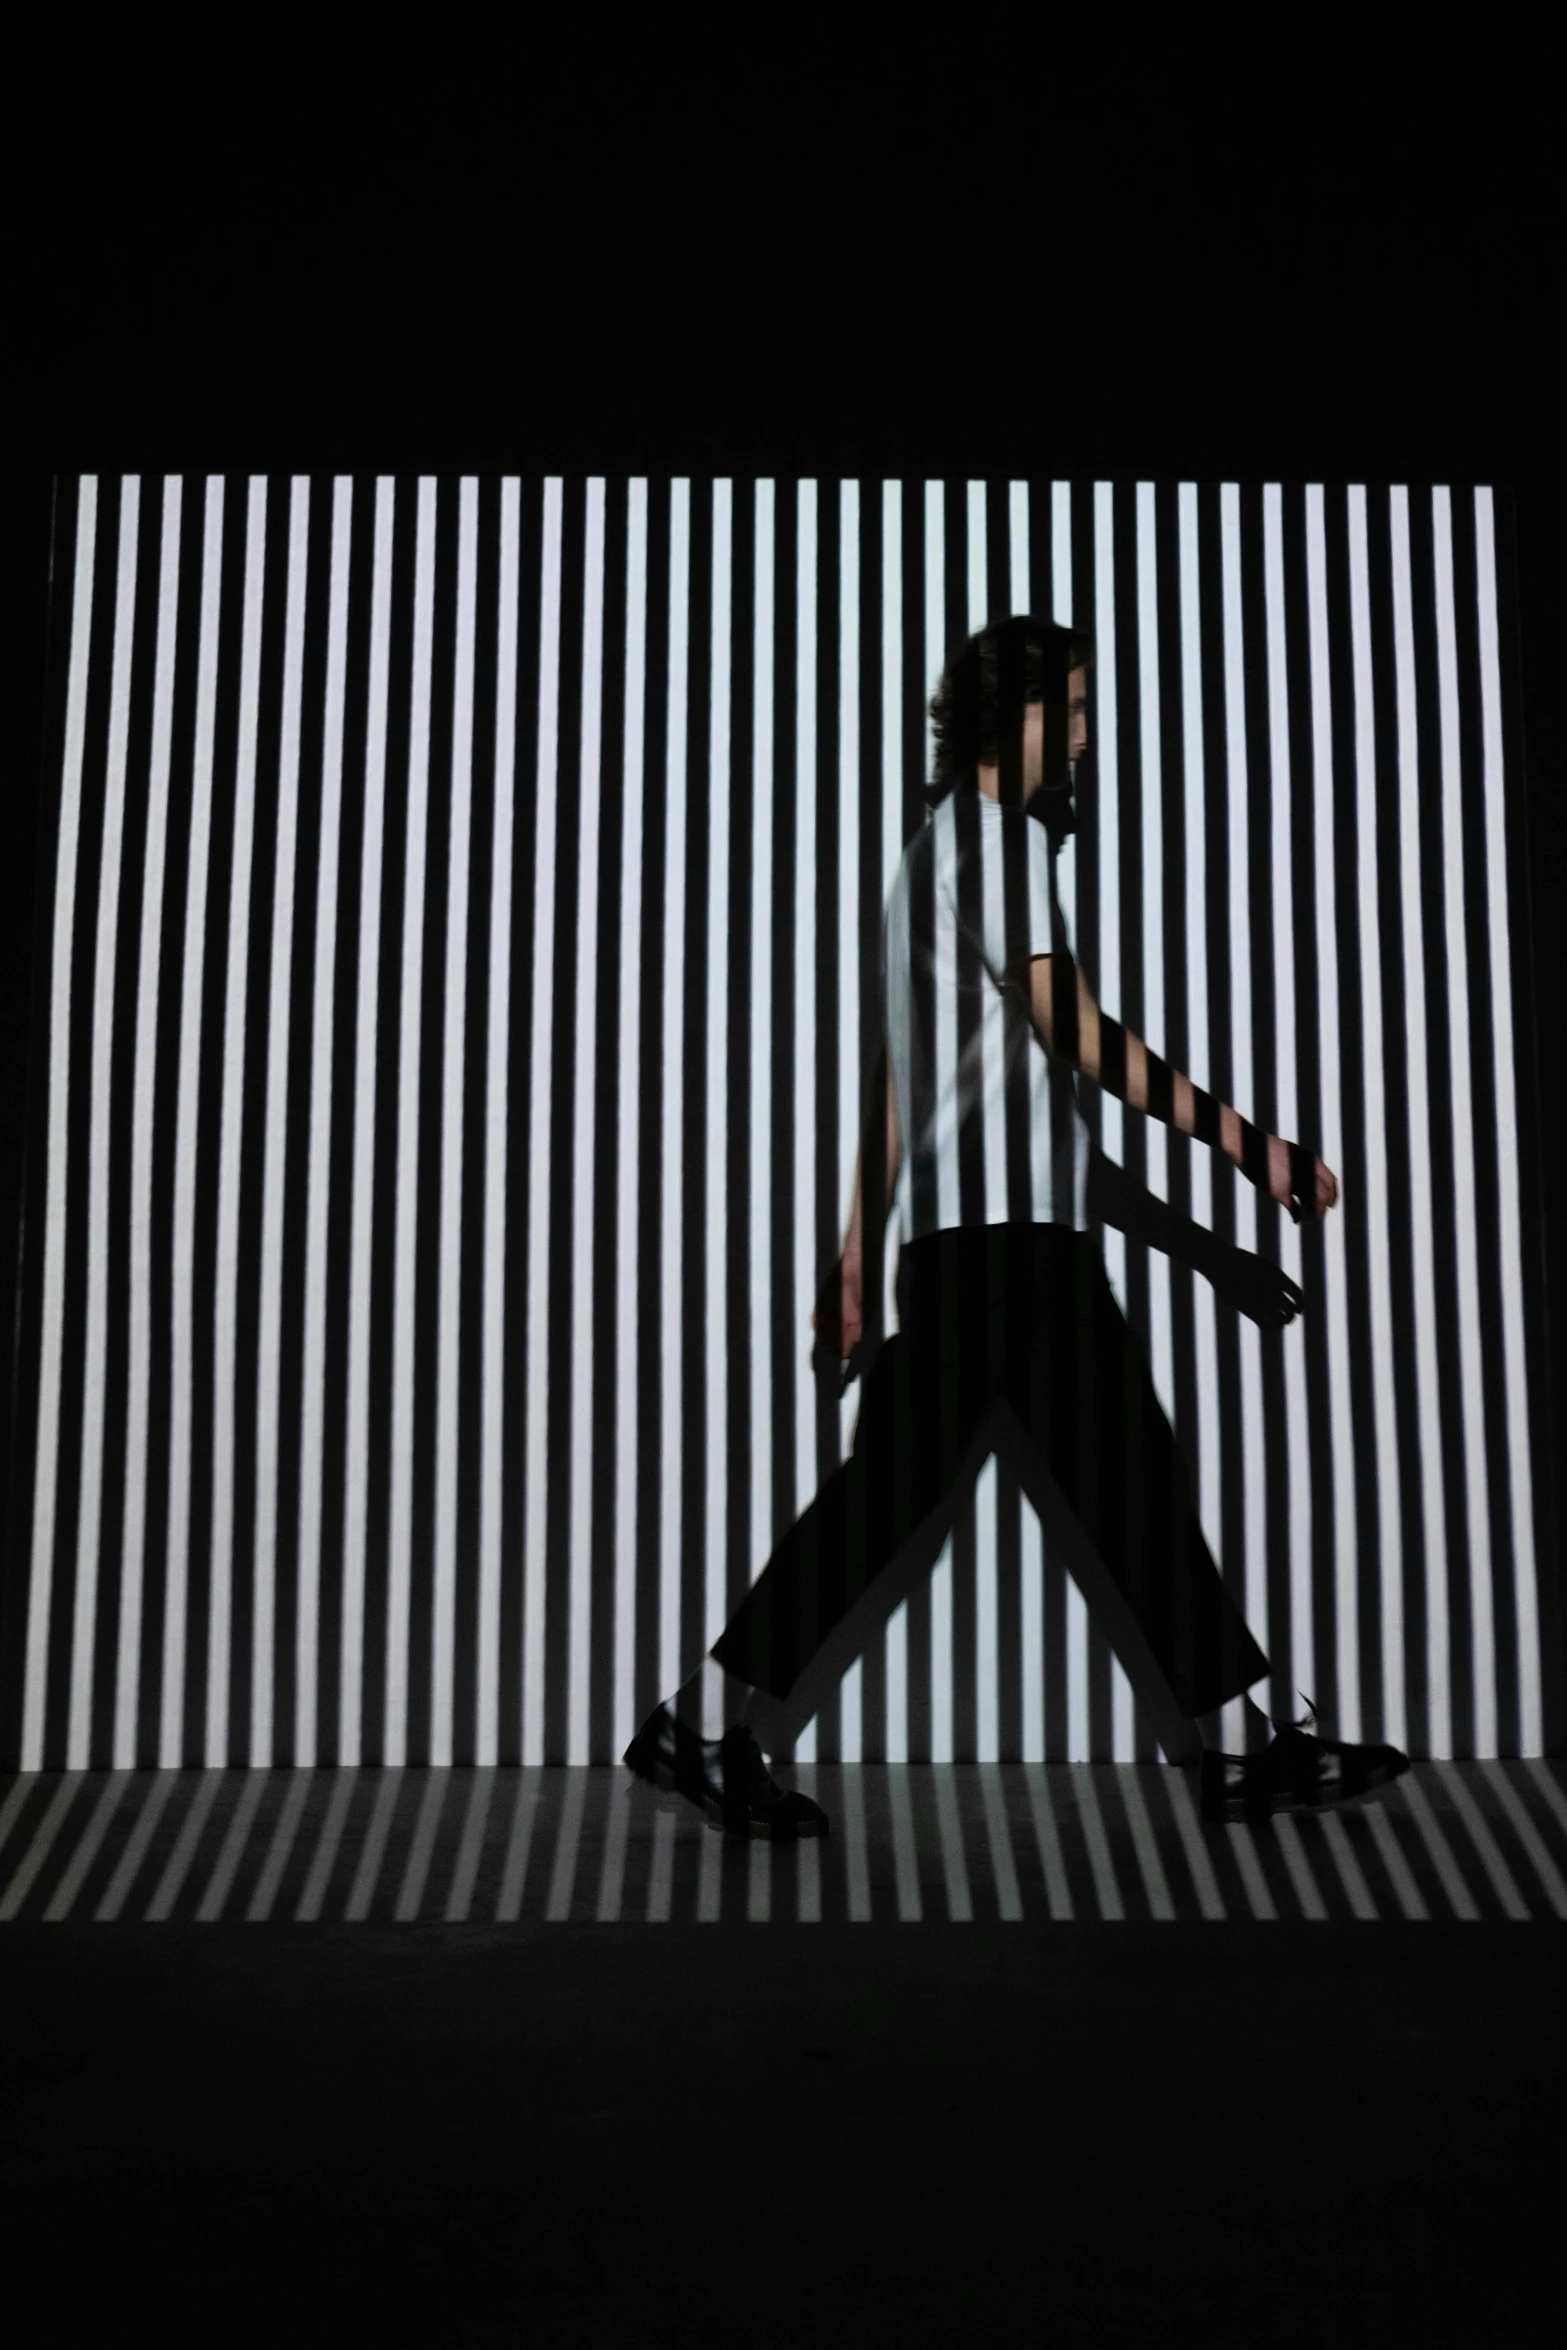 a man holding a tennis racquet on top of a tennis court, inspired by Ryoji Ikeda, video art, walks down dark hallway, black stripes, motion capture system, billboard image